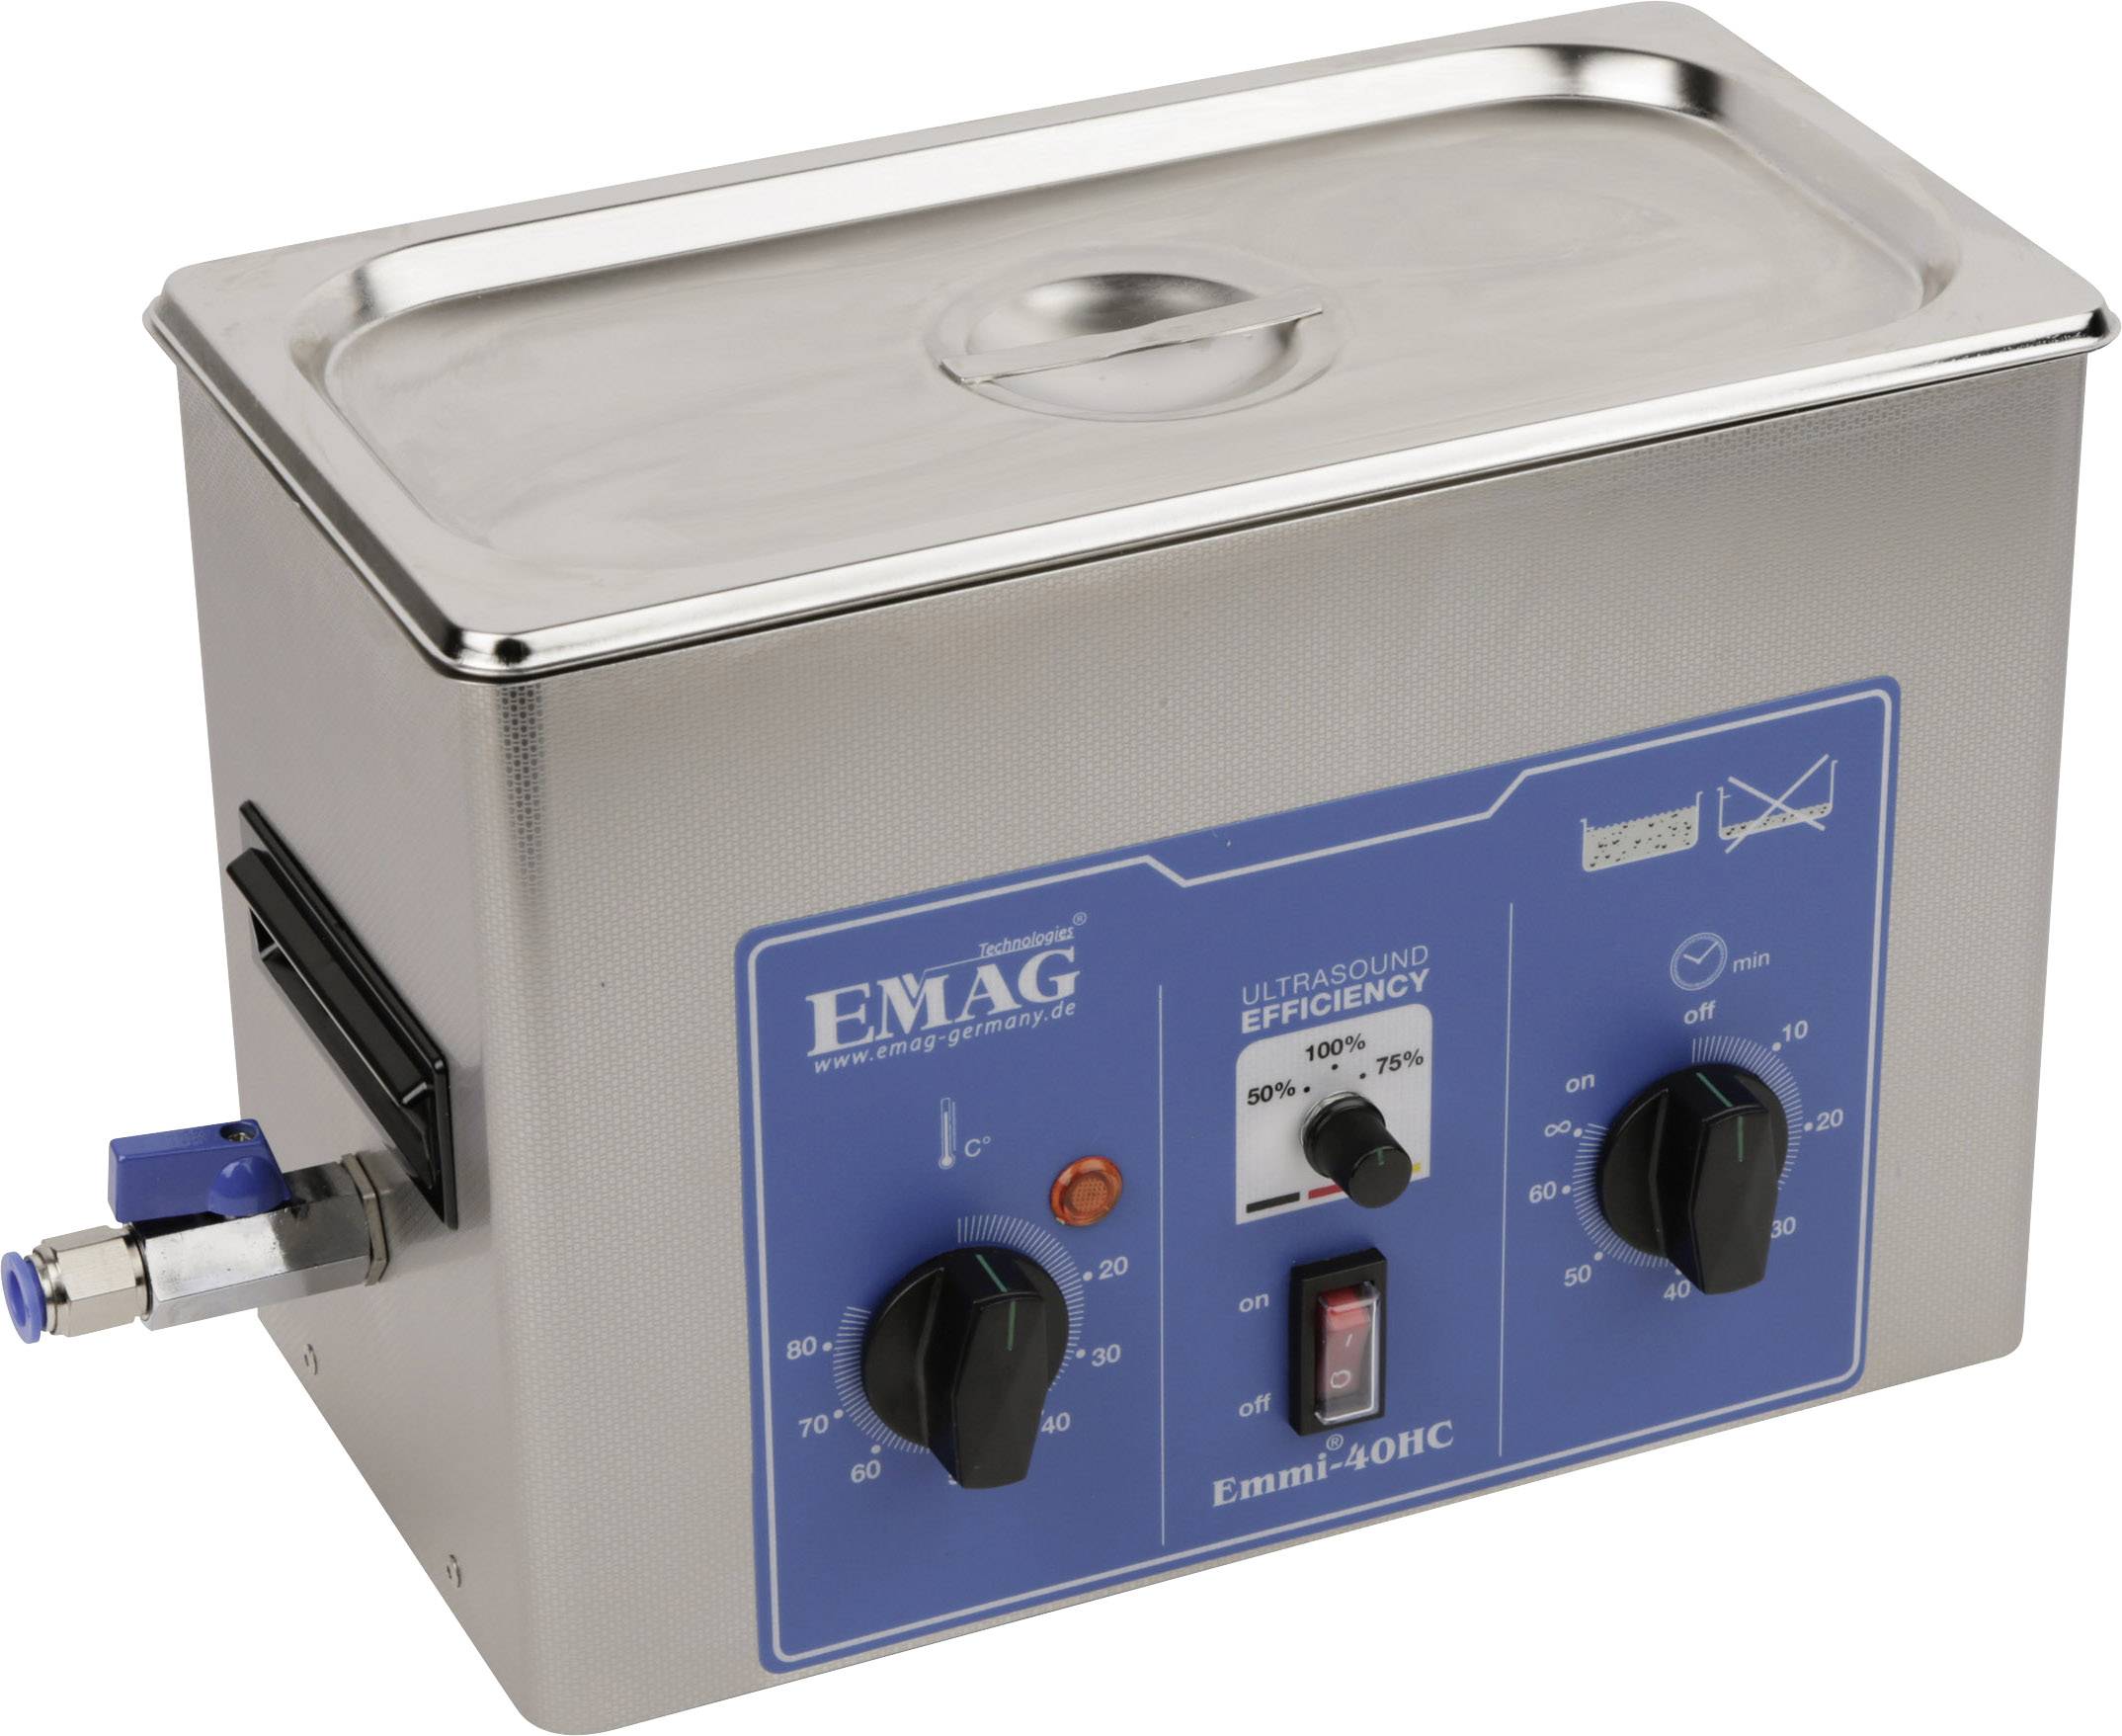 Nettoyeur à ultrasons 100 W 1.2 l Emag 12 HC - Conrad Electronic France